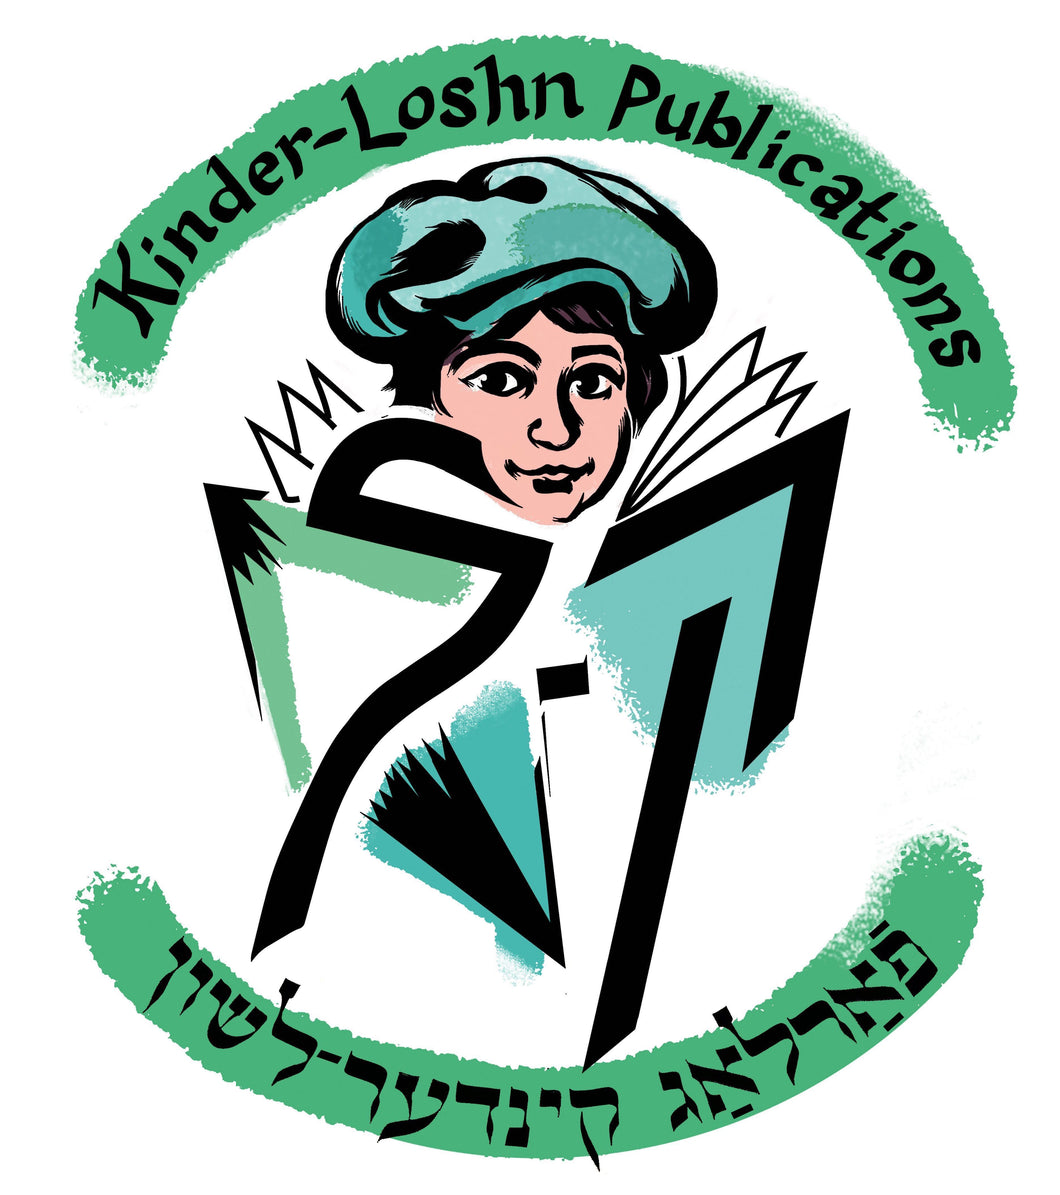 Kinder-Loshn Publications Stickers